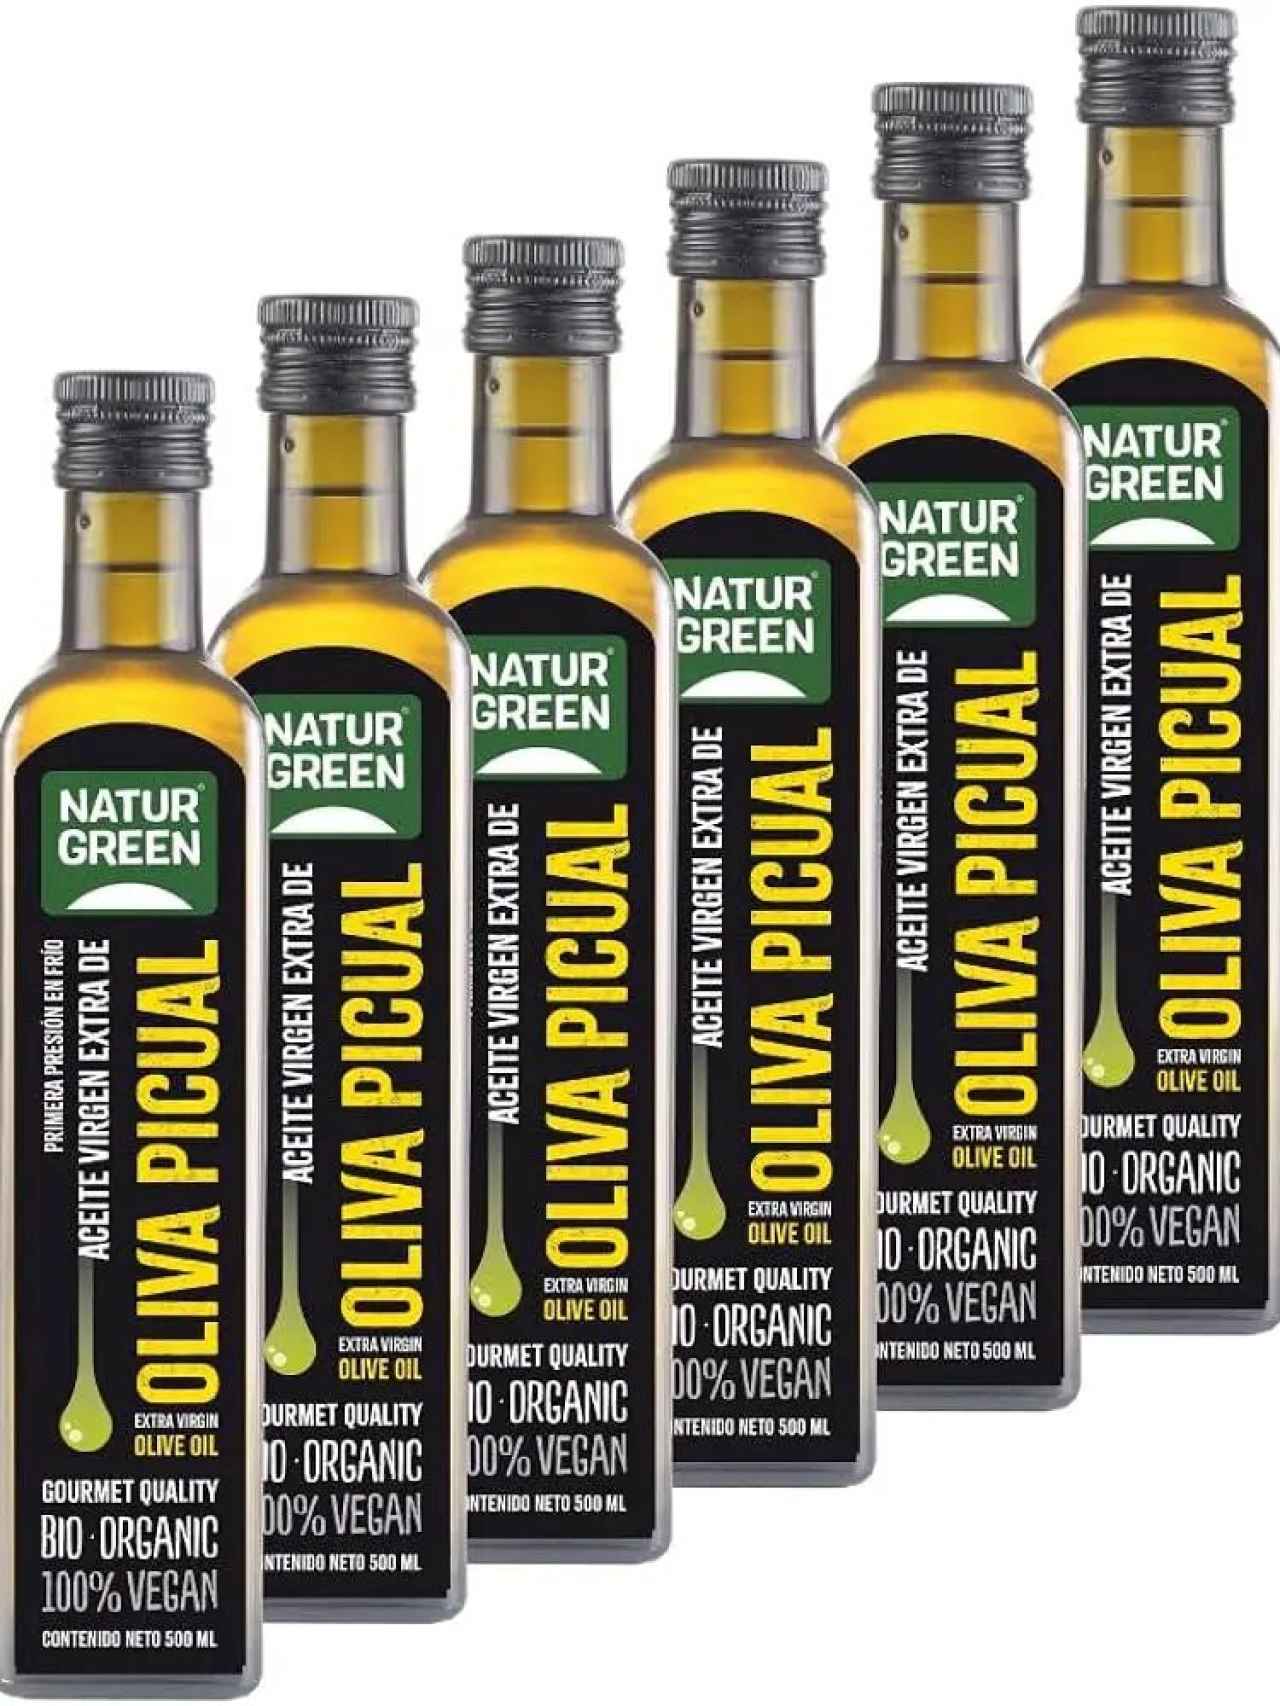 Aceite de oliva virgen extra ecológico de NaturGreen.